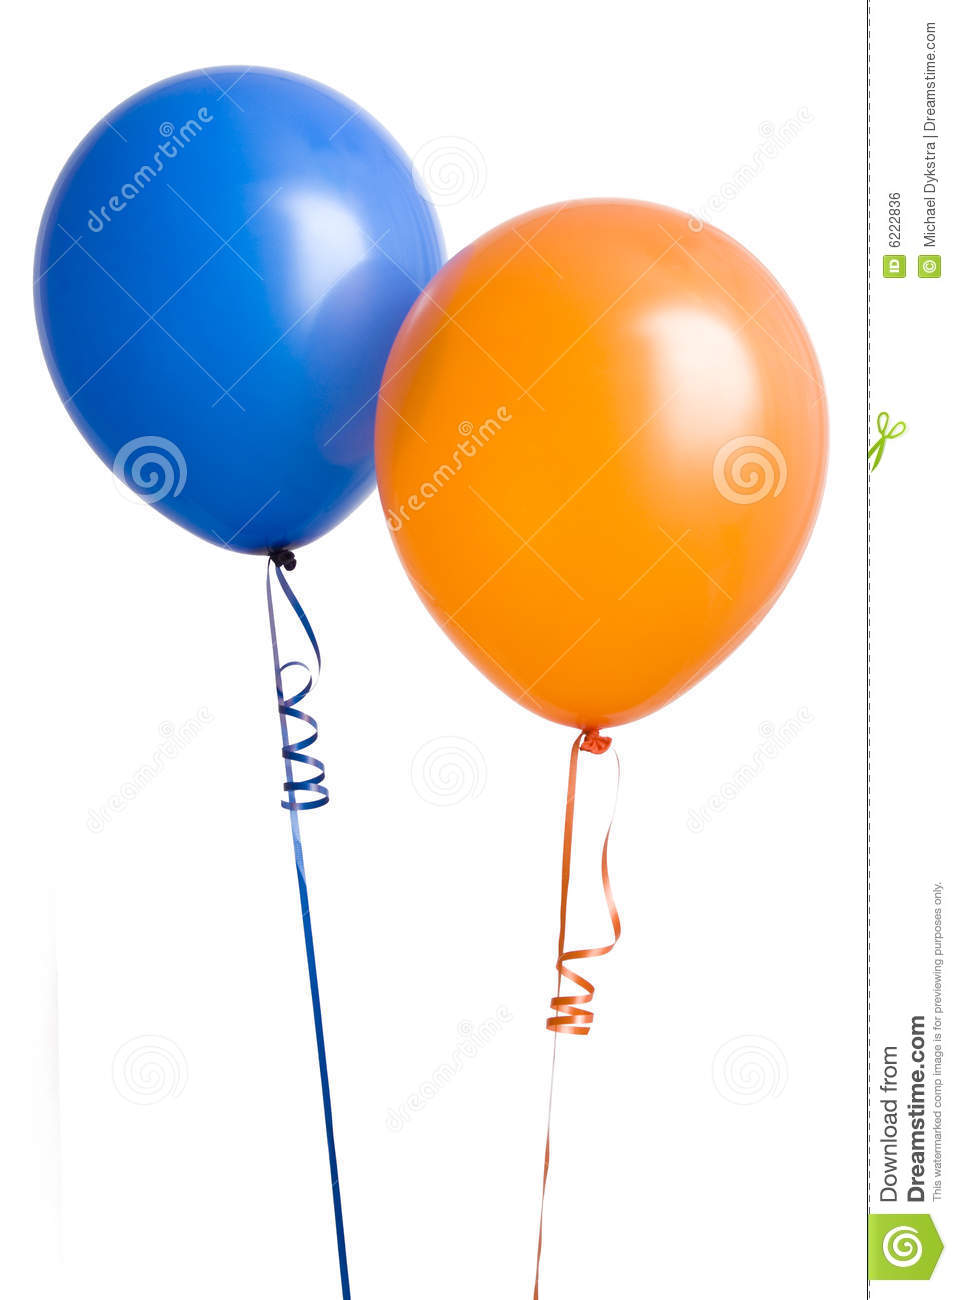 Orange And Blue Balloon Royalty Free Stock Image   Image  6222836